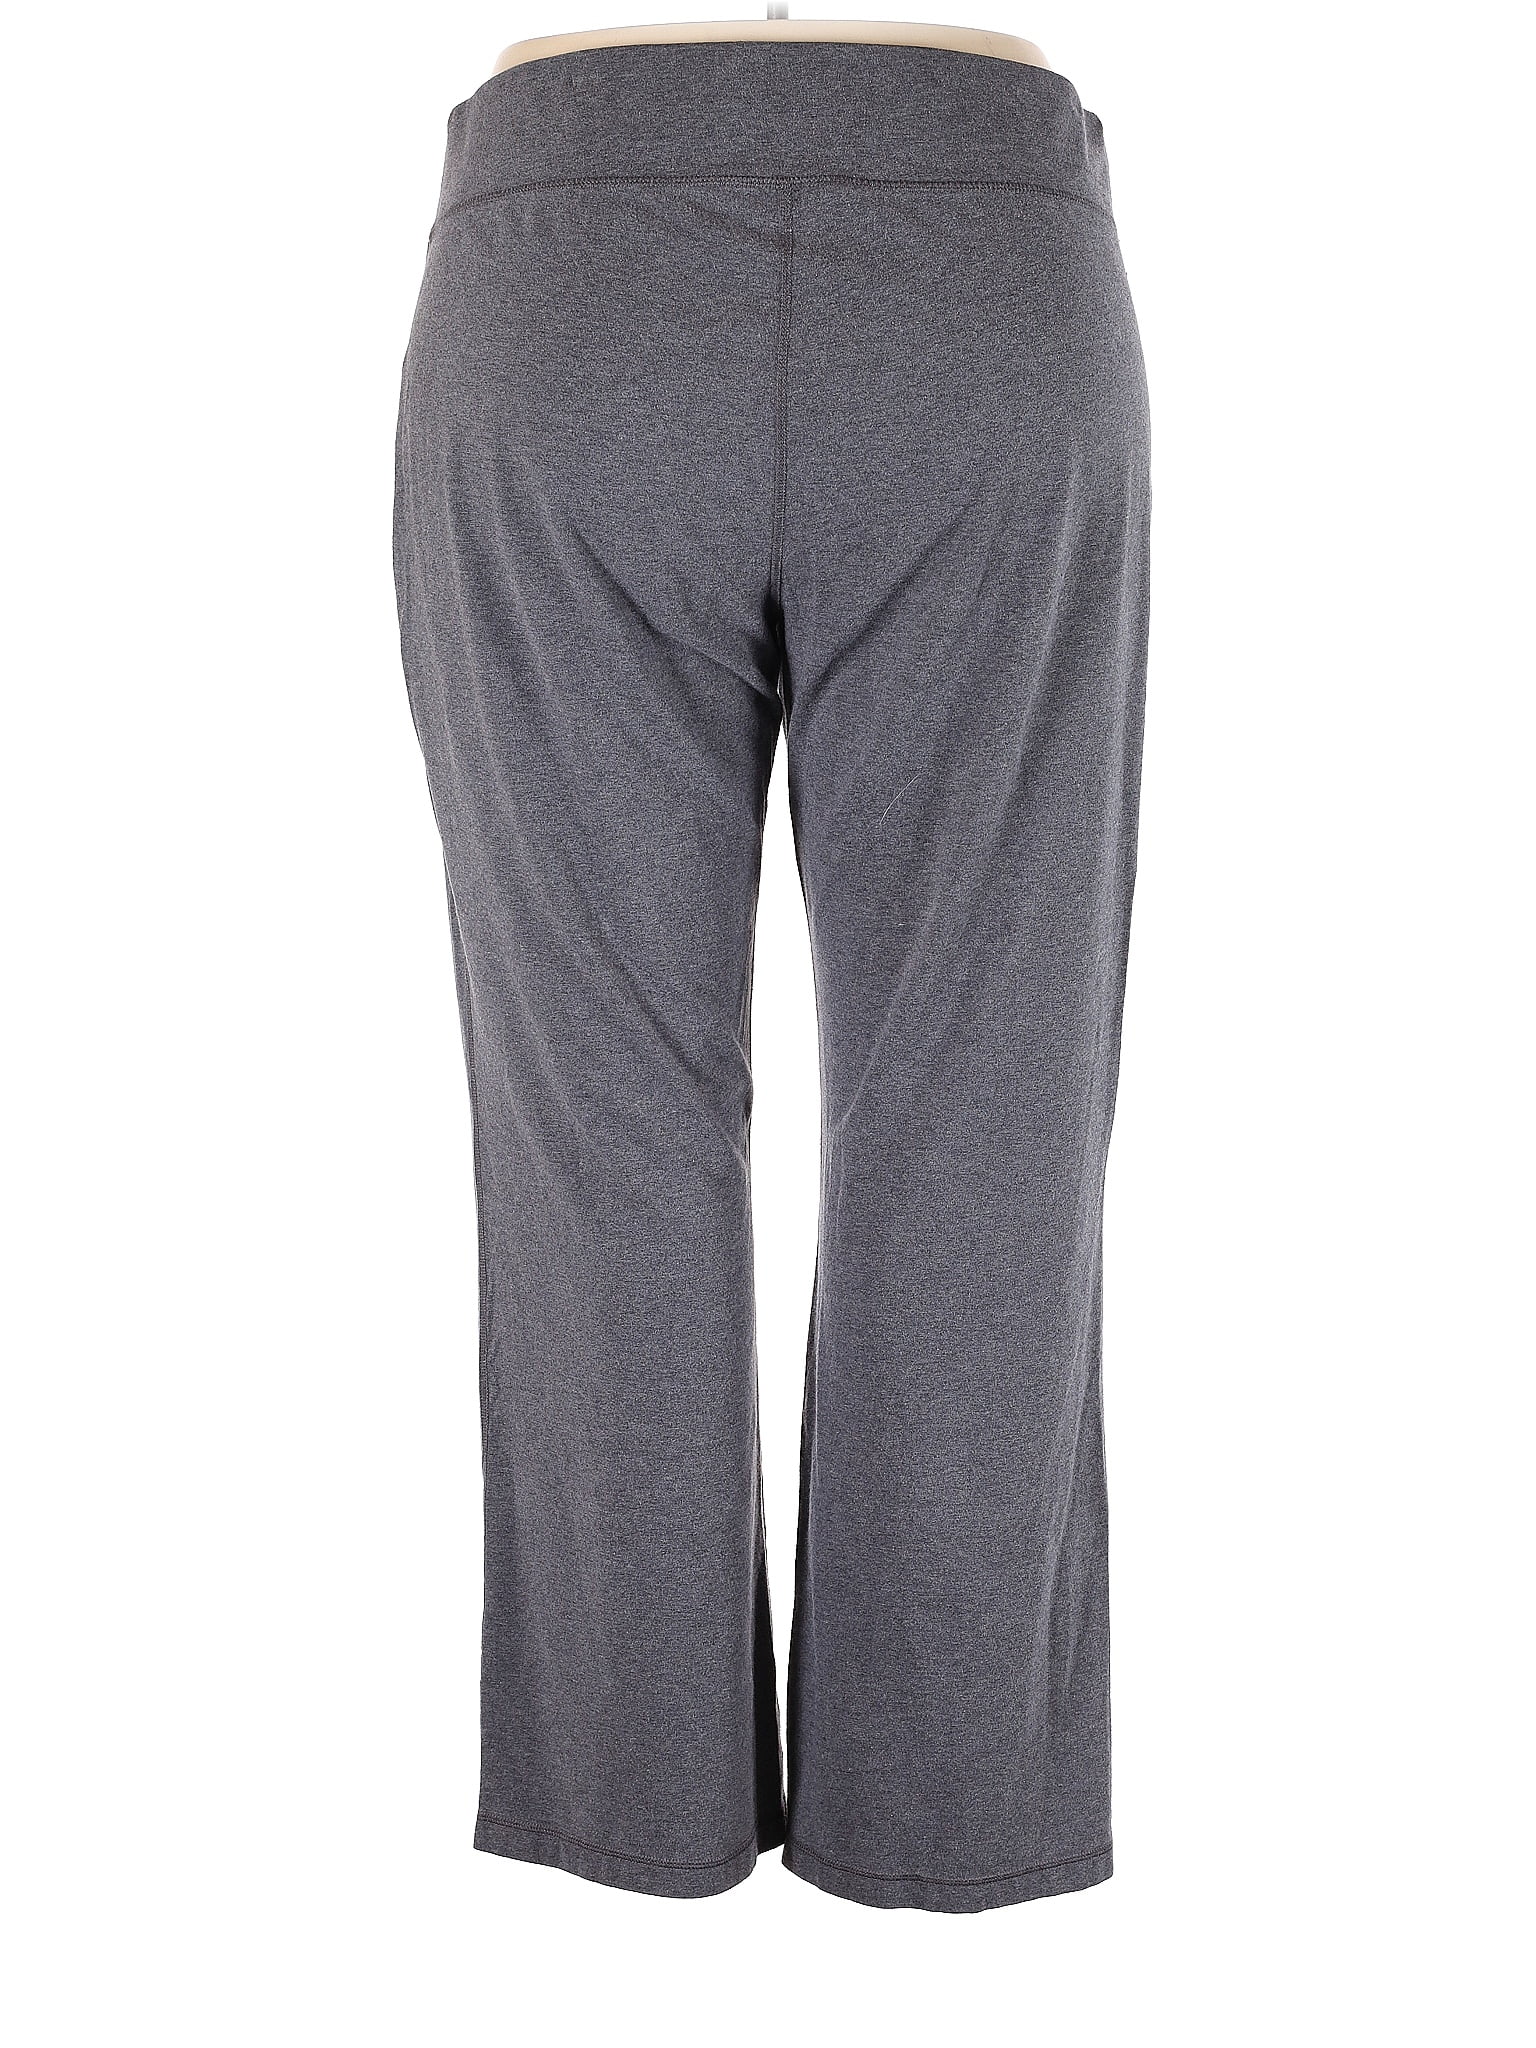 Danskin Now Gray Active Pants Size M - 52% off